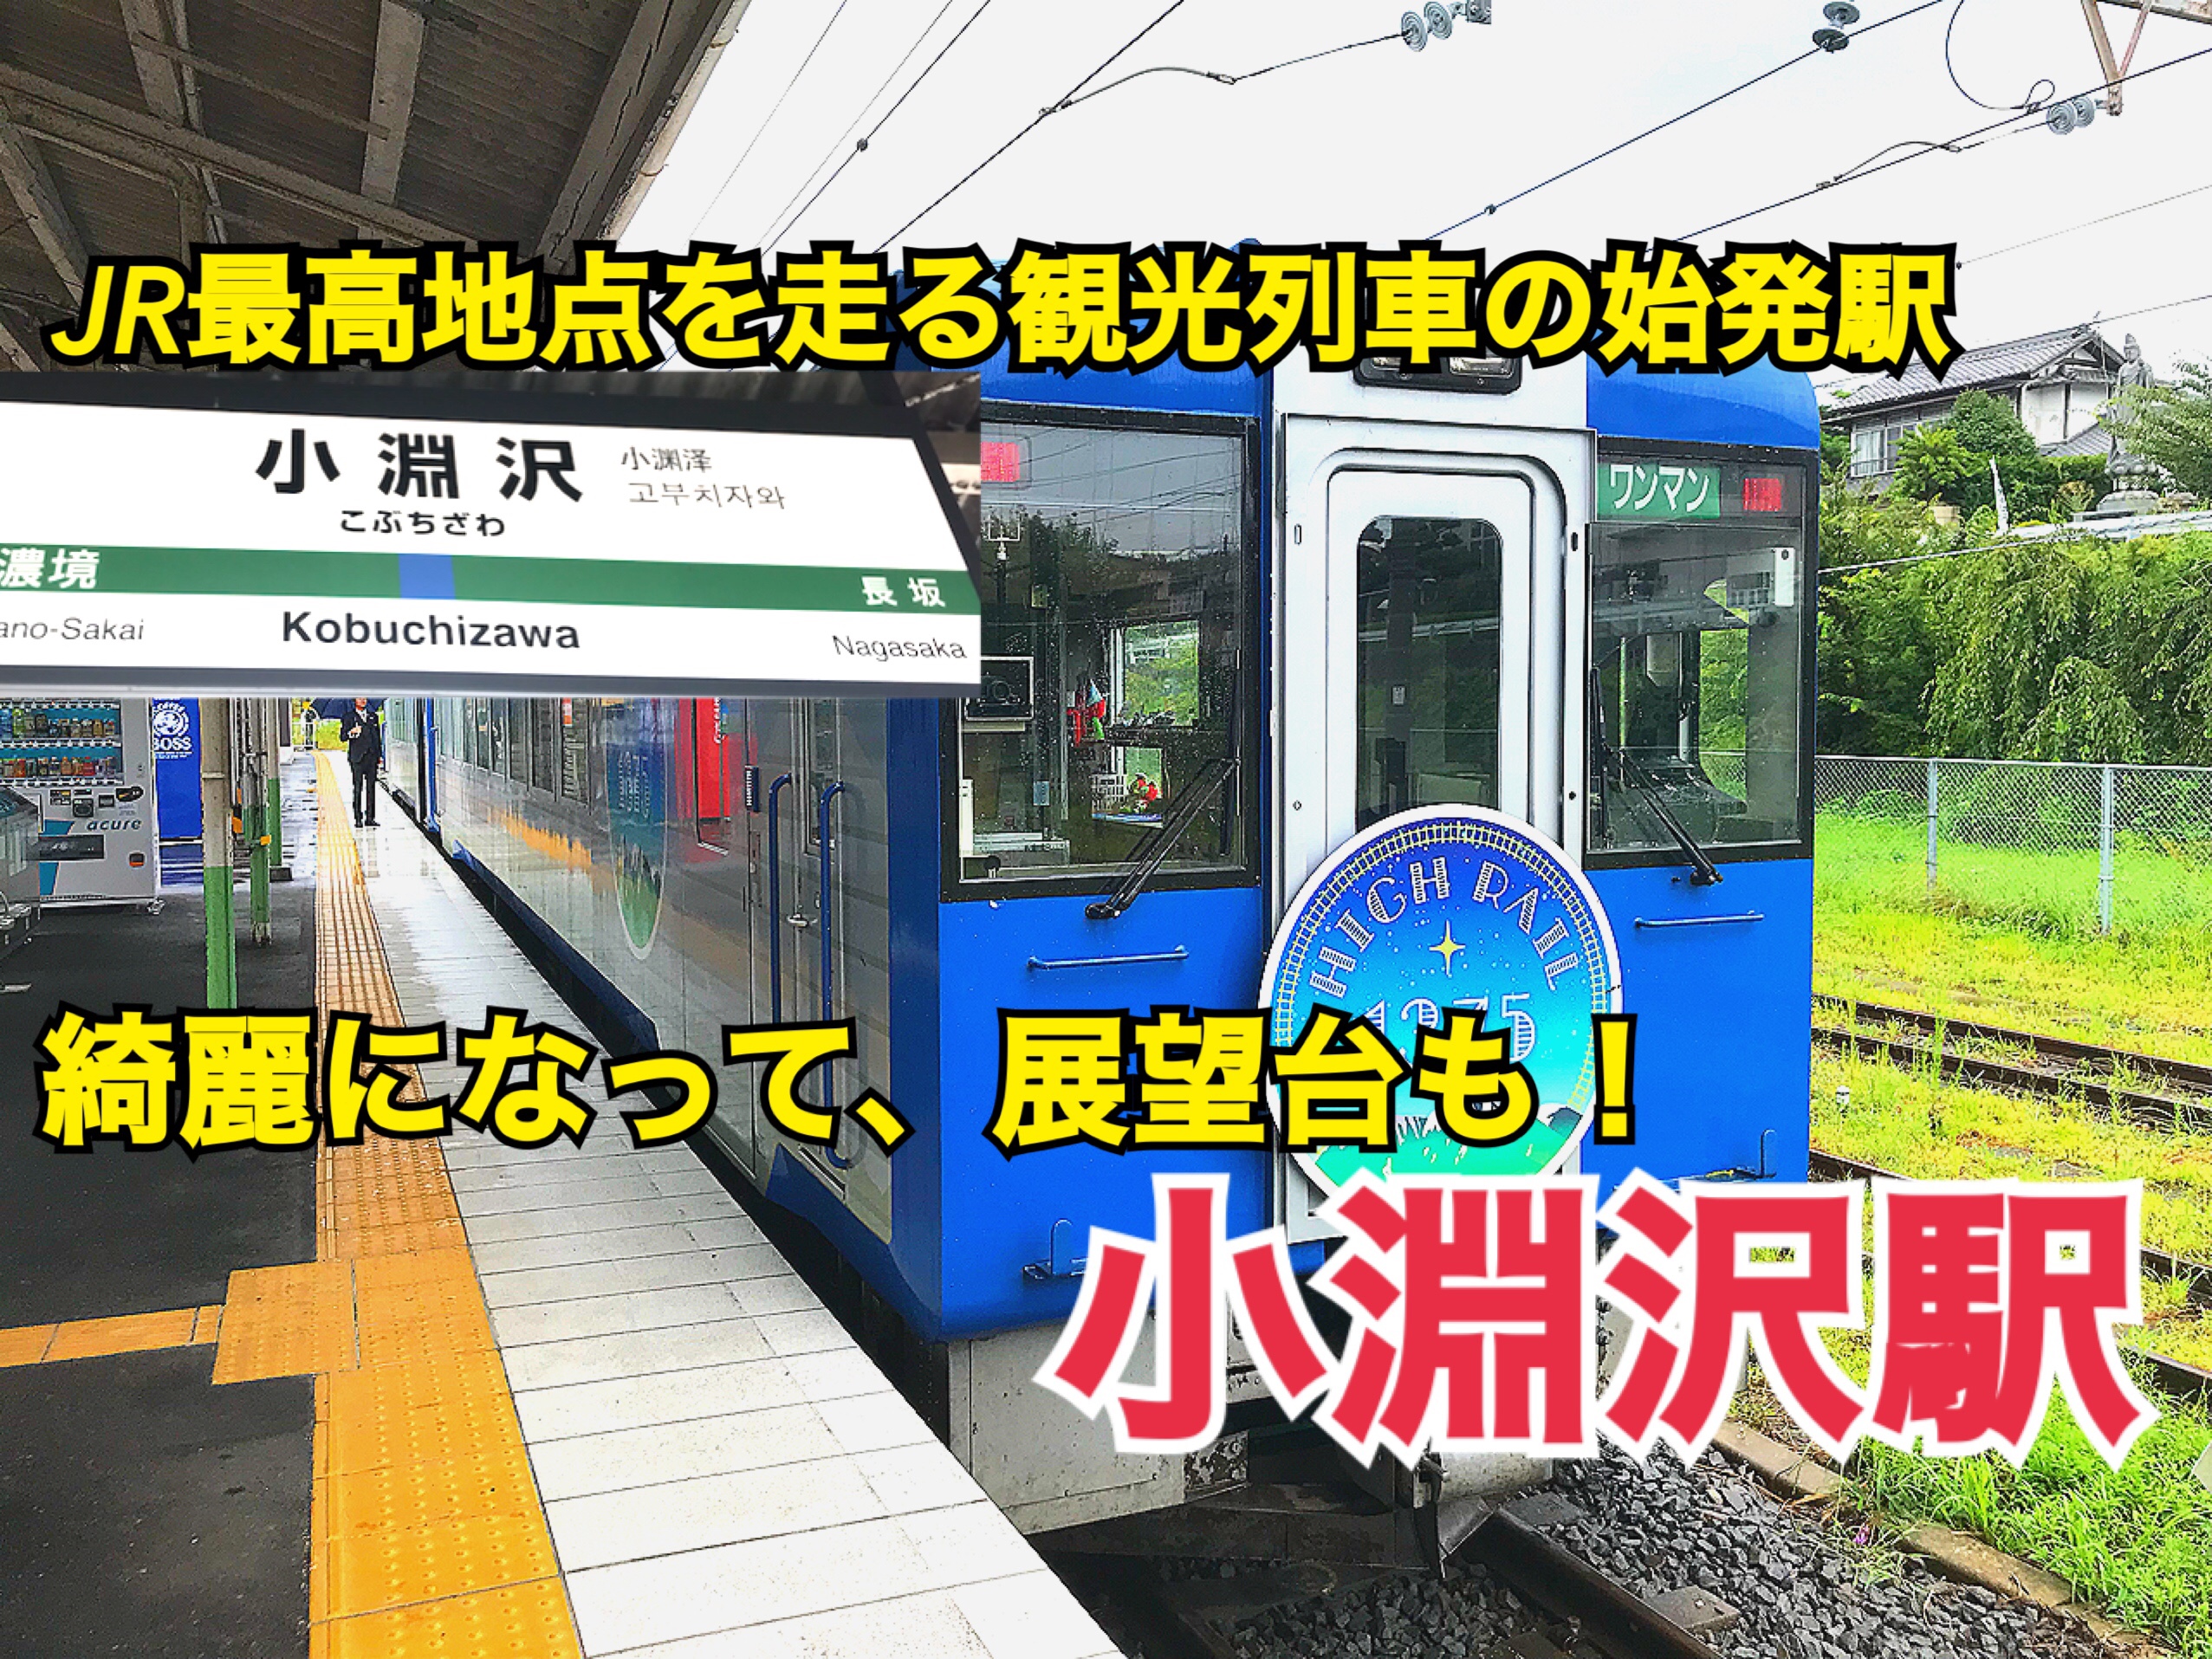 HIGH RAIL 1375も来る！綺麗になった小淵沢駅はすごい！【中央線普通列車の旅】